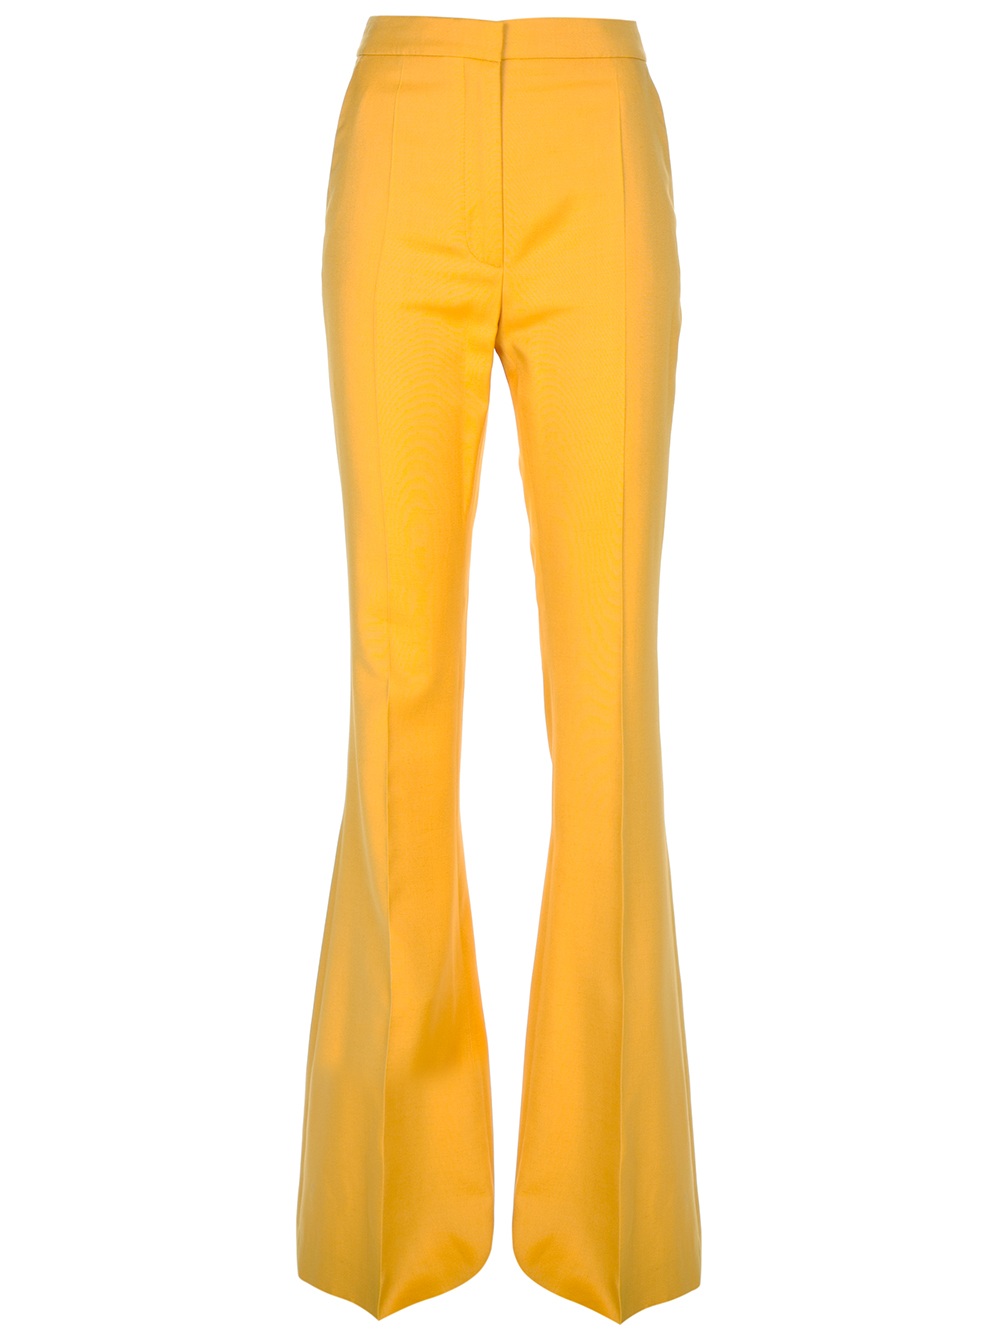 Stella McCartney Flared Trouser in Yellow - Lyst